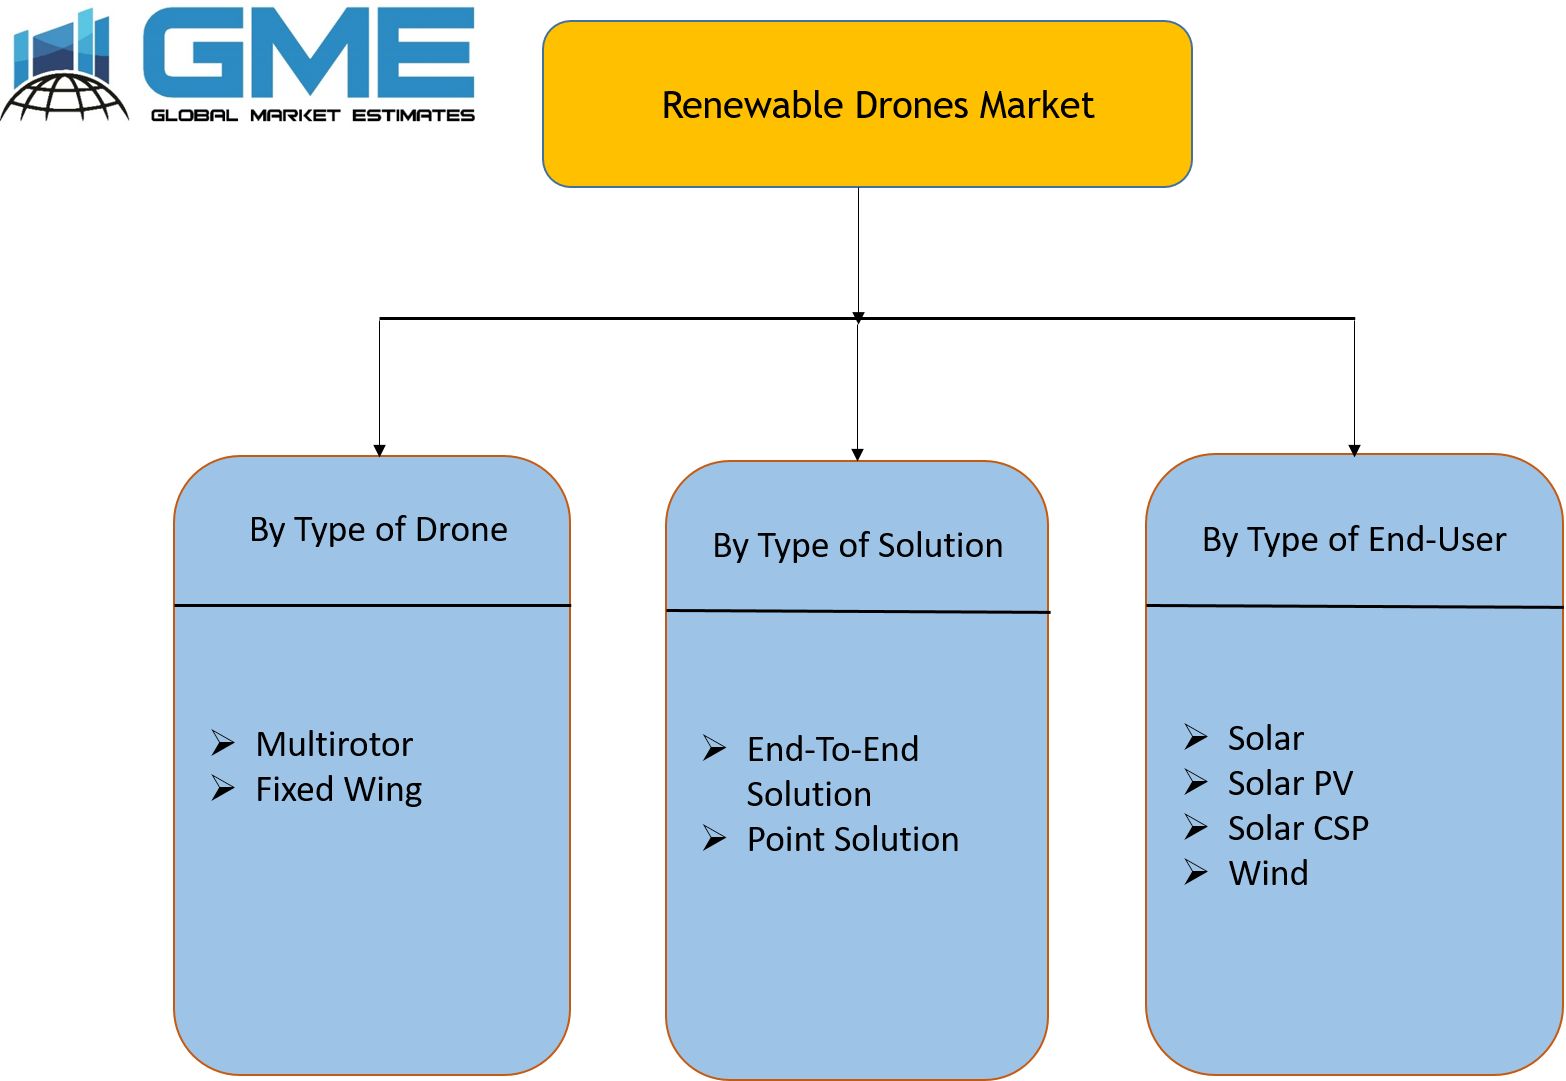 Renewable Drones Market Segmentation